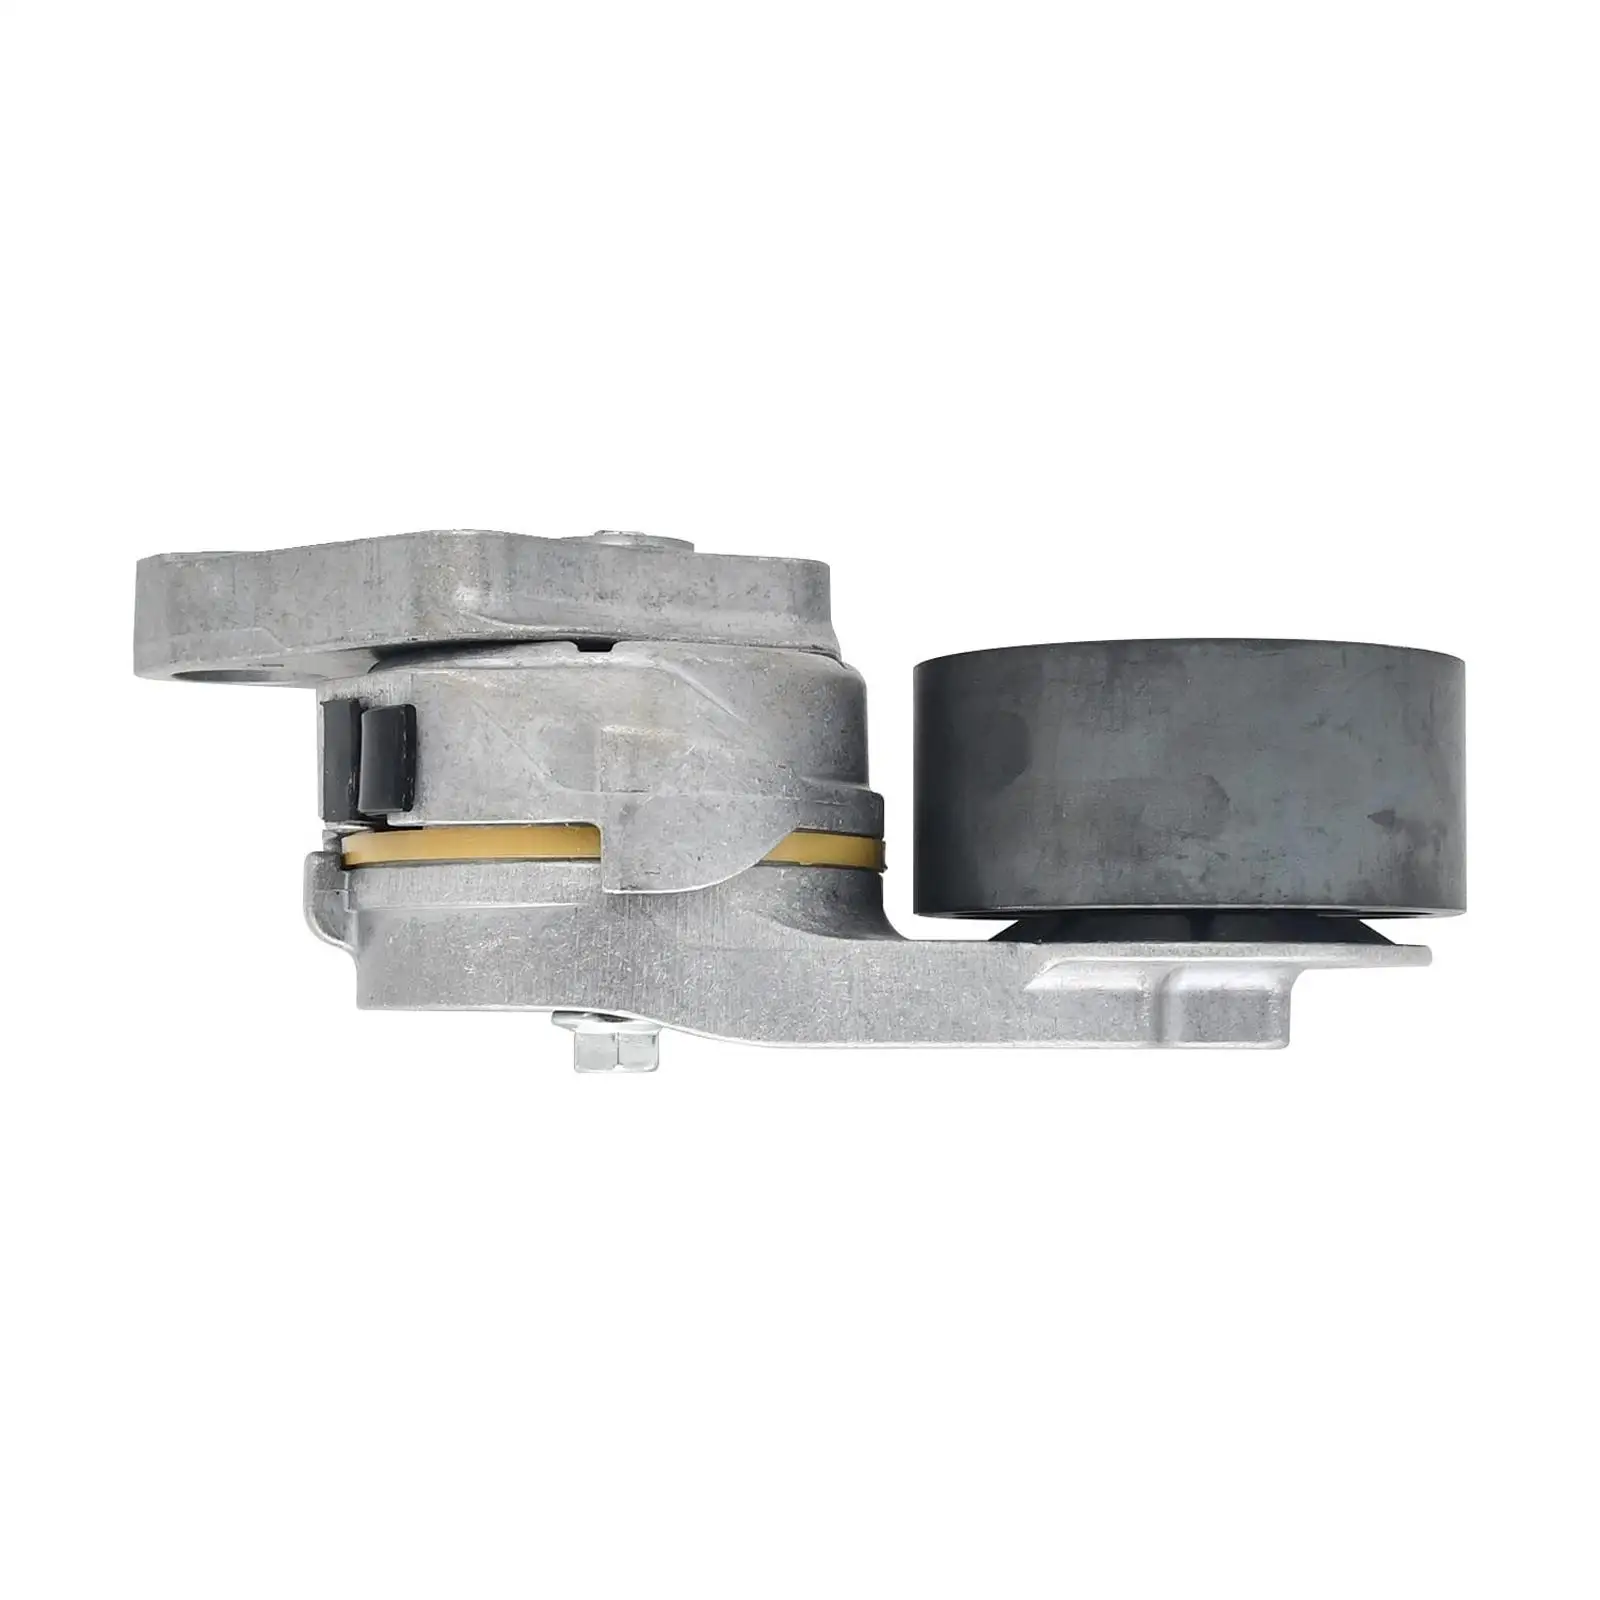 23669027 A/C Belt Tensioner Adjustable Lightweight Sturdy Durability for D13